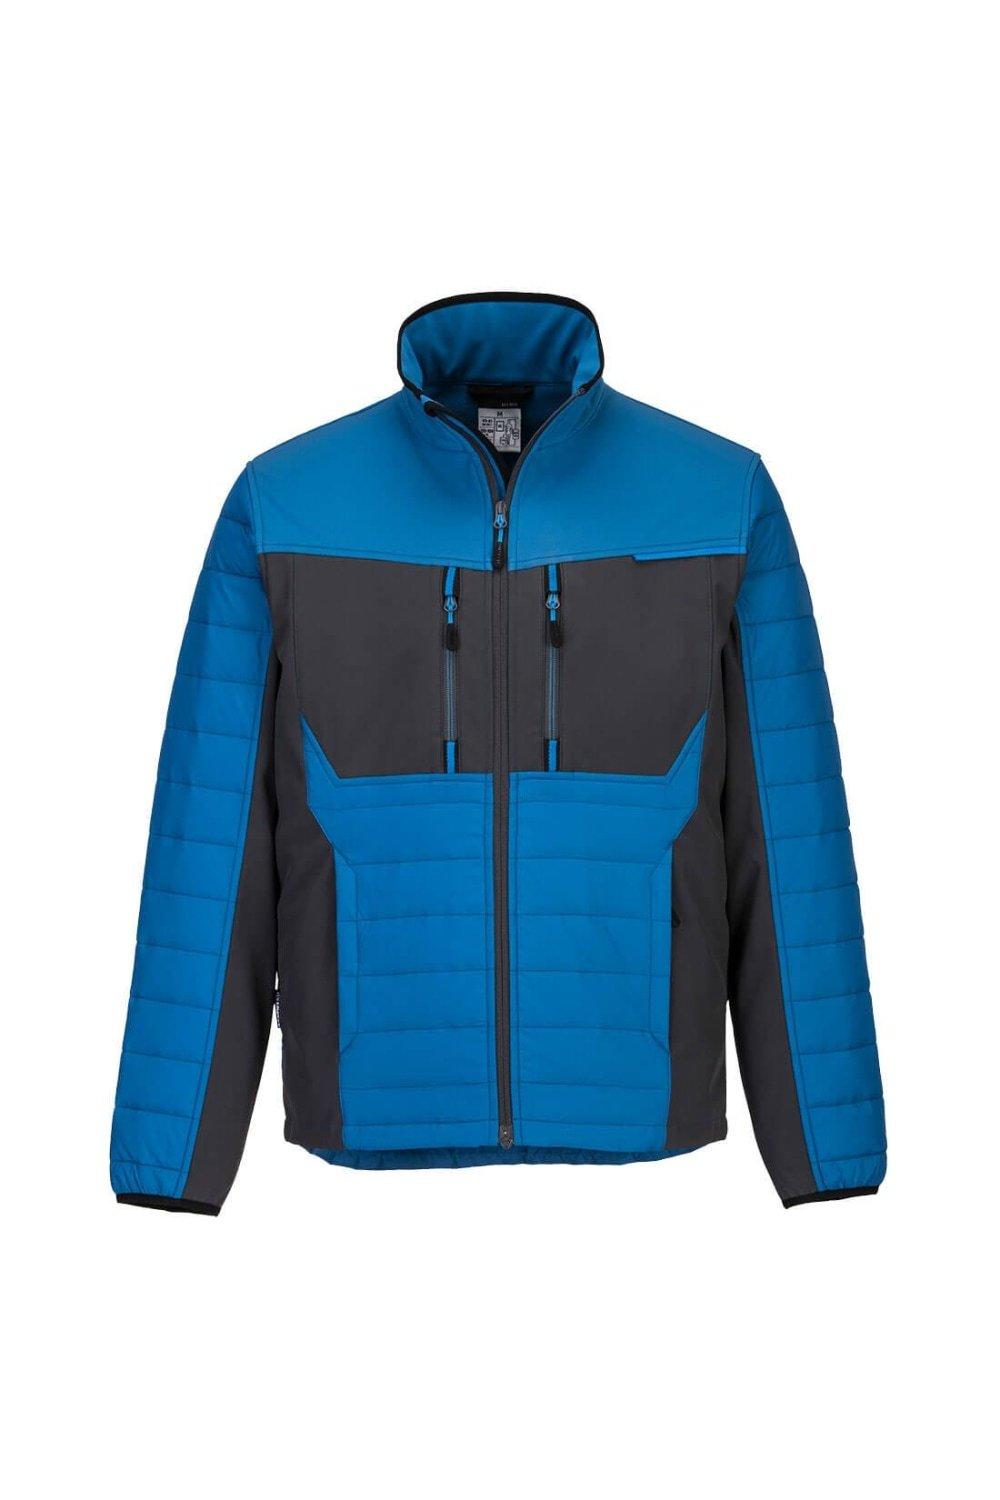 Гибридная куртка WX3 с перегородками Portwest, синий